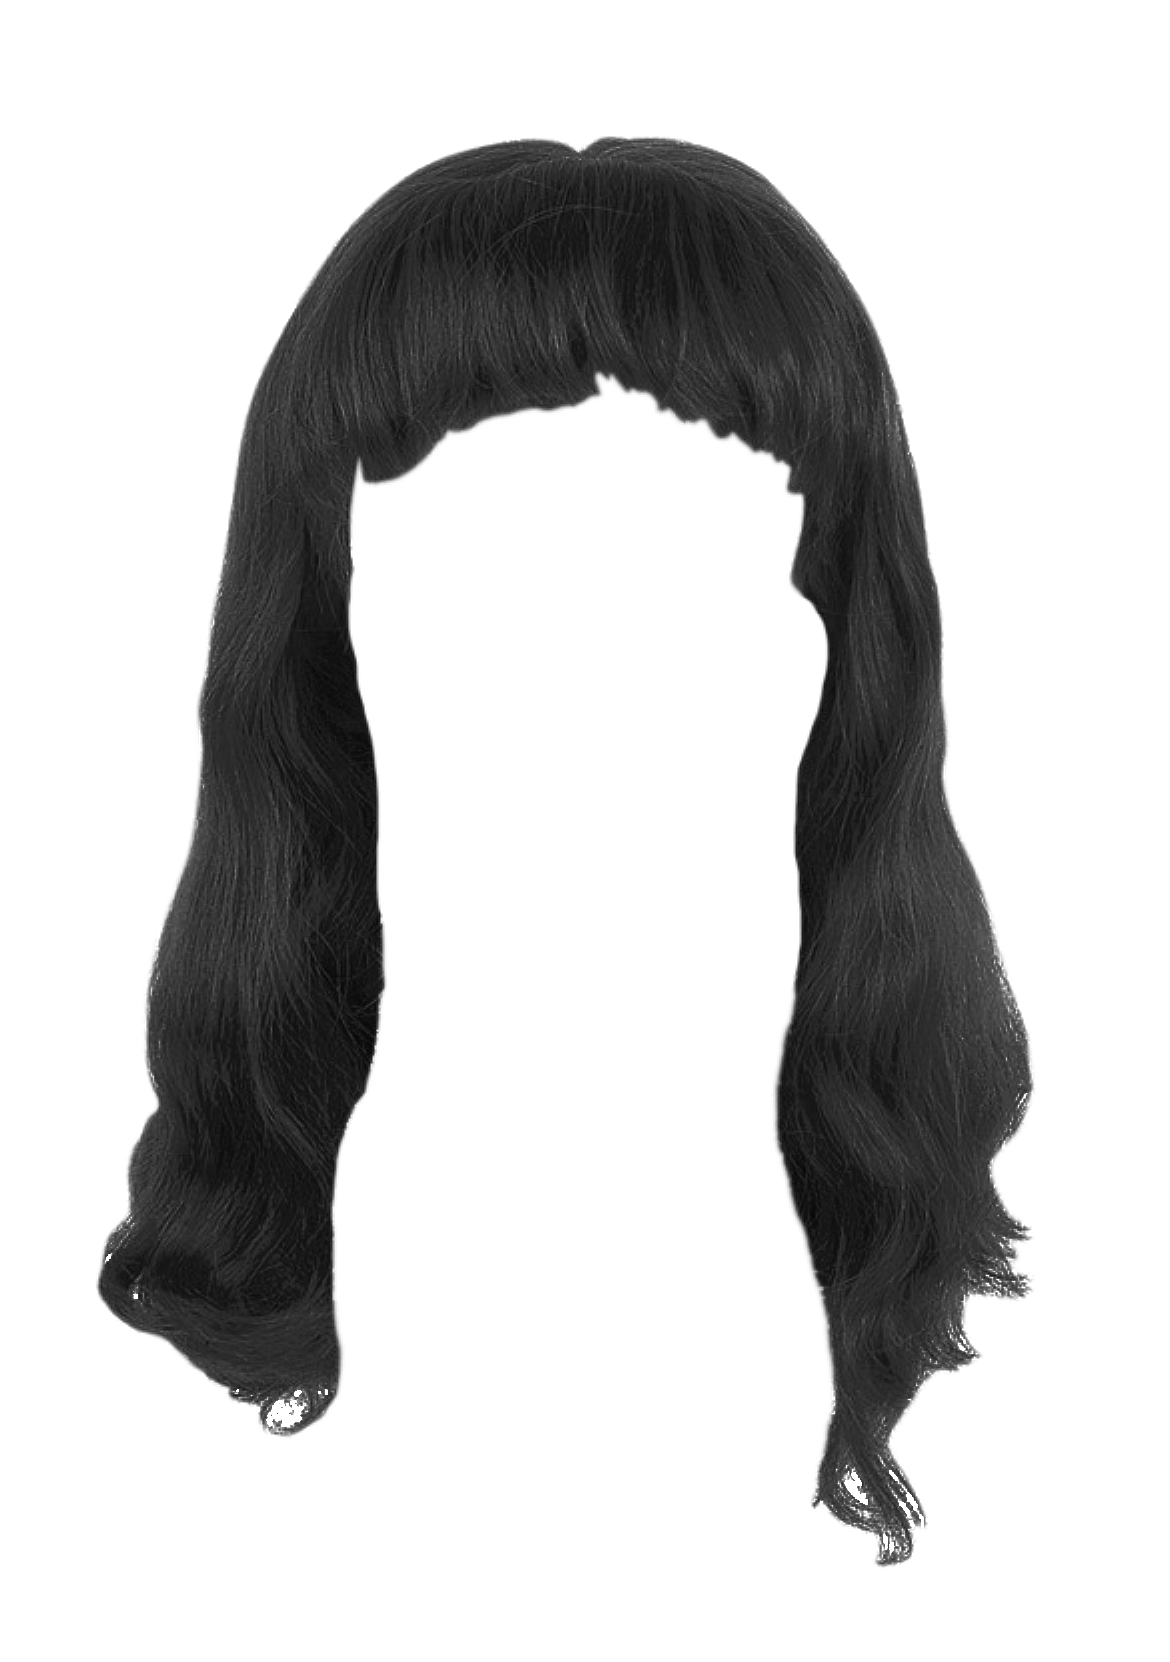 PNG File Name: Hair PlusPng.c